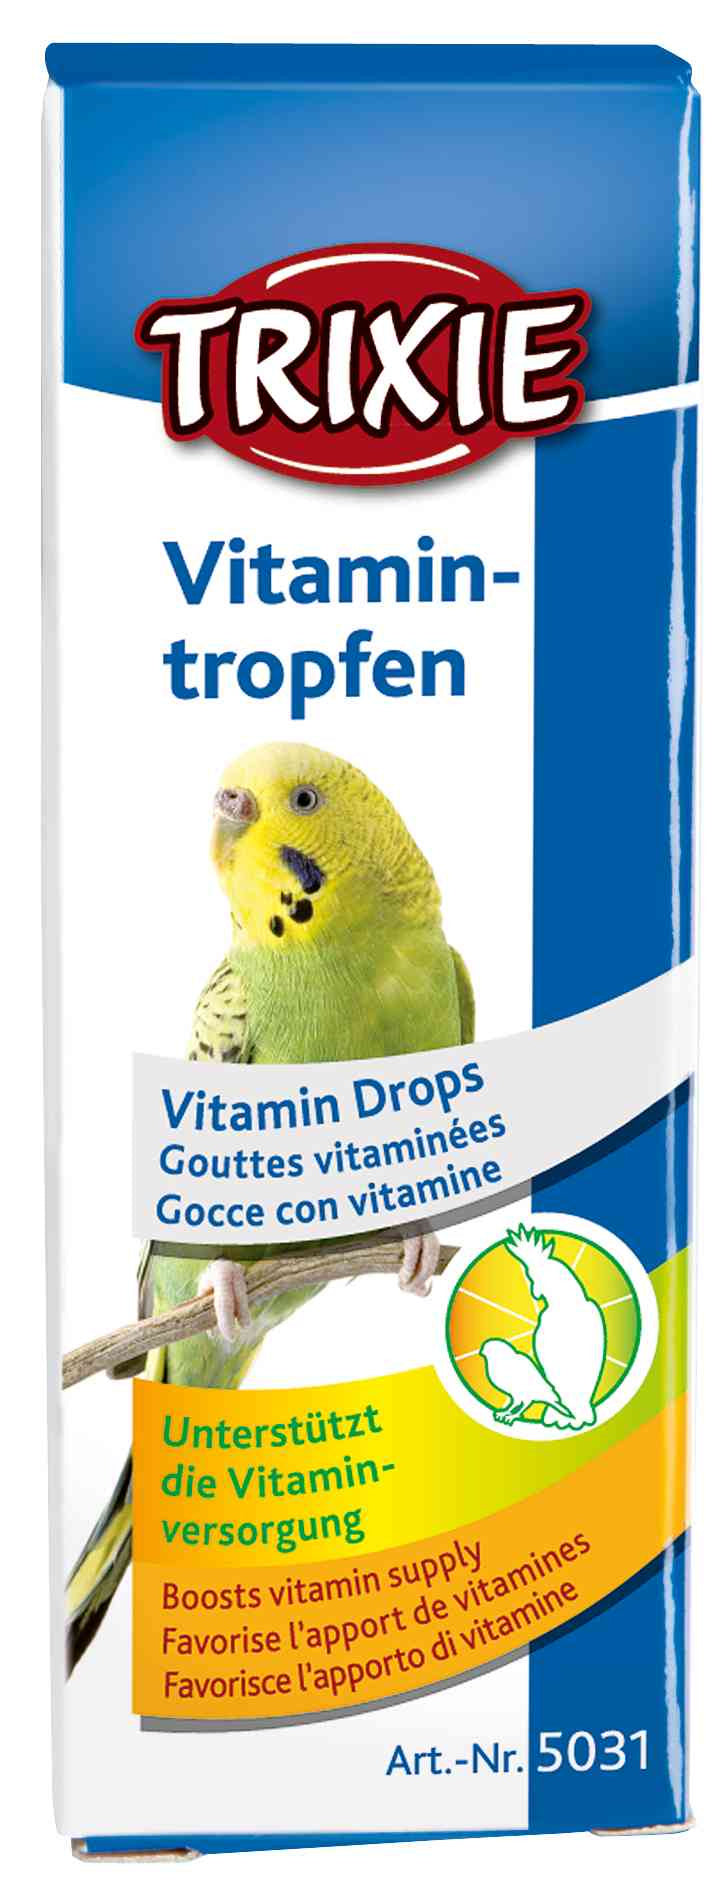 5031 Vitamin drops for birds, 15 ml